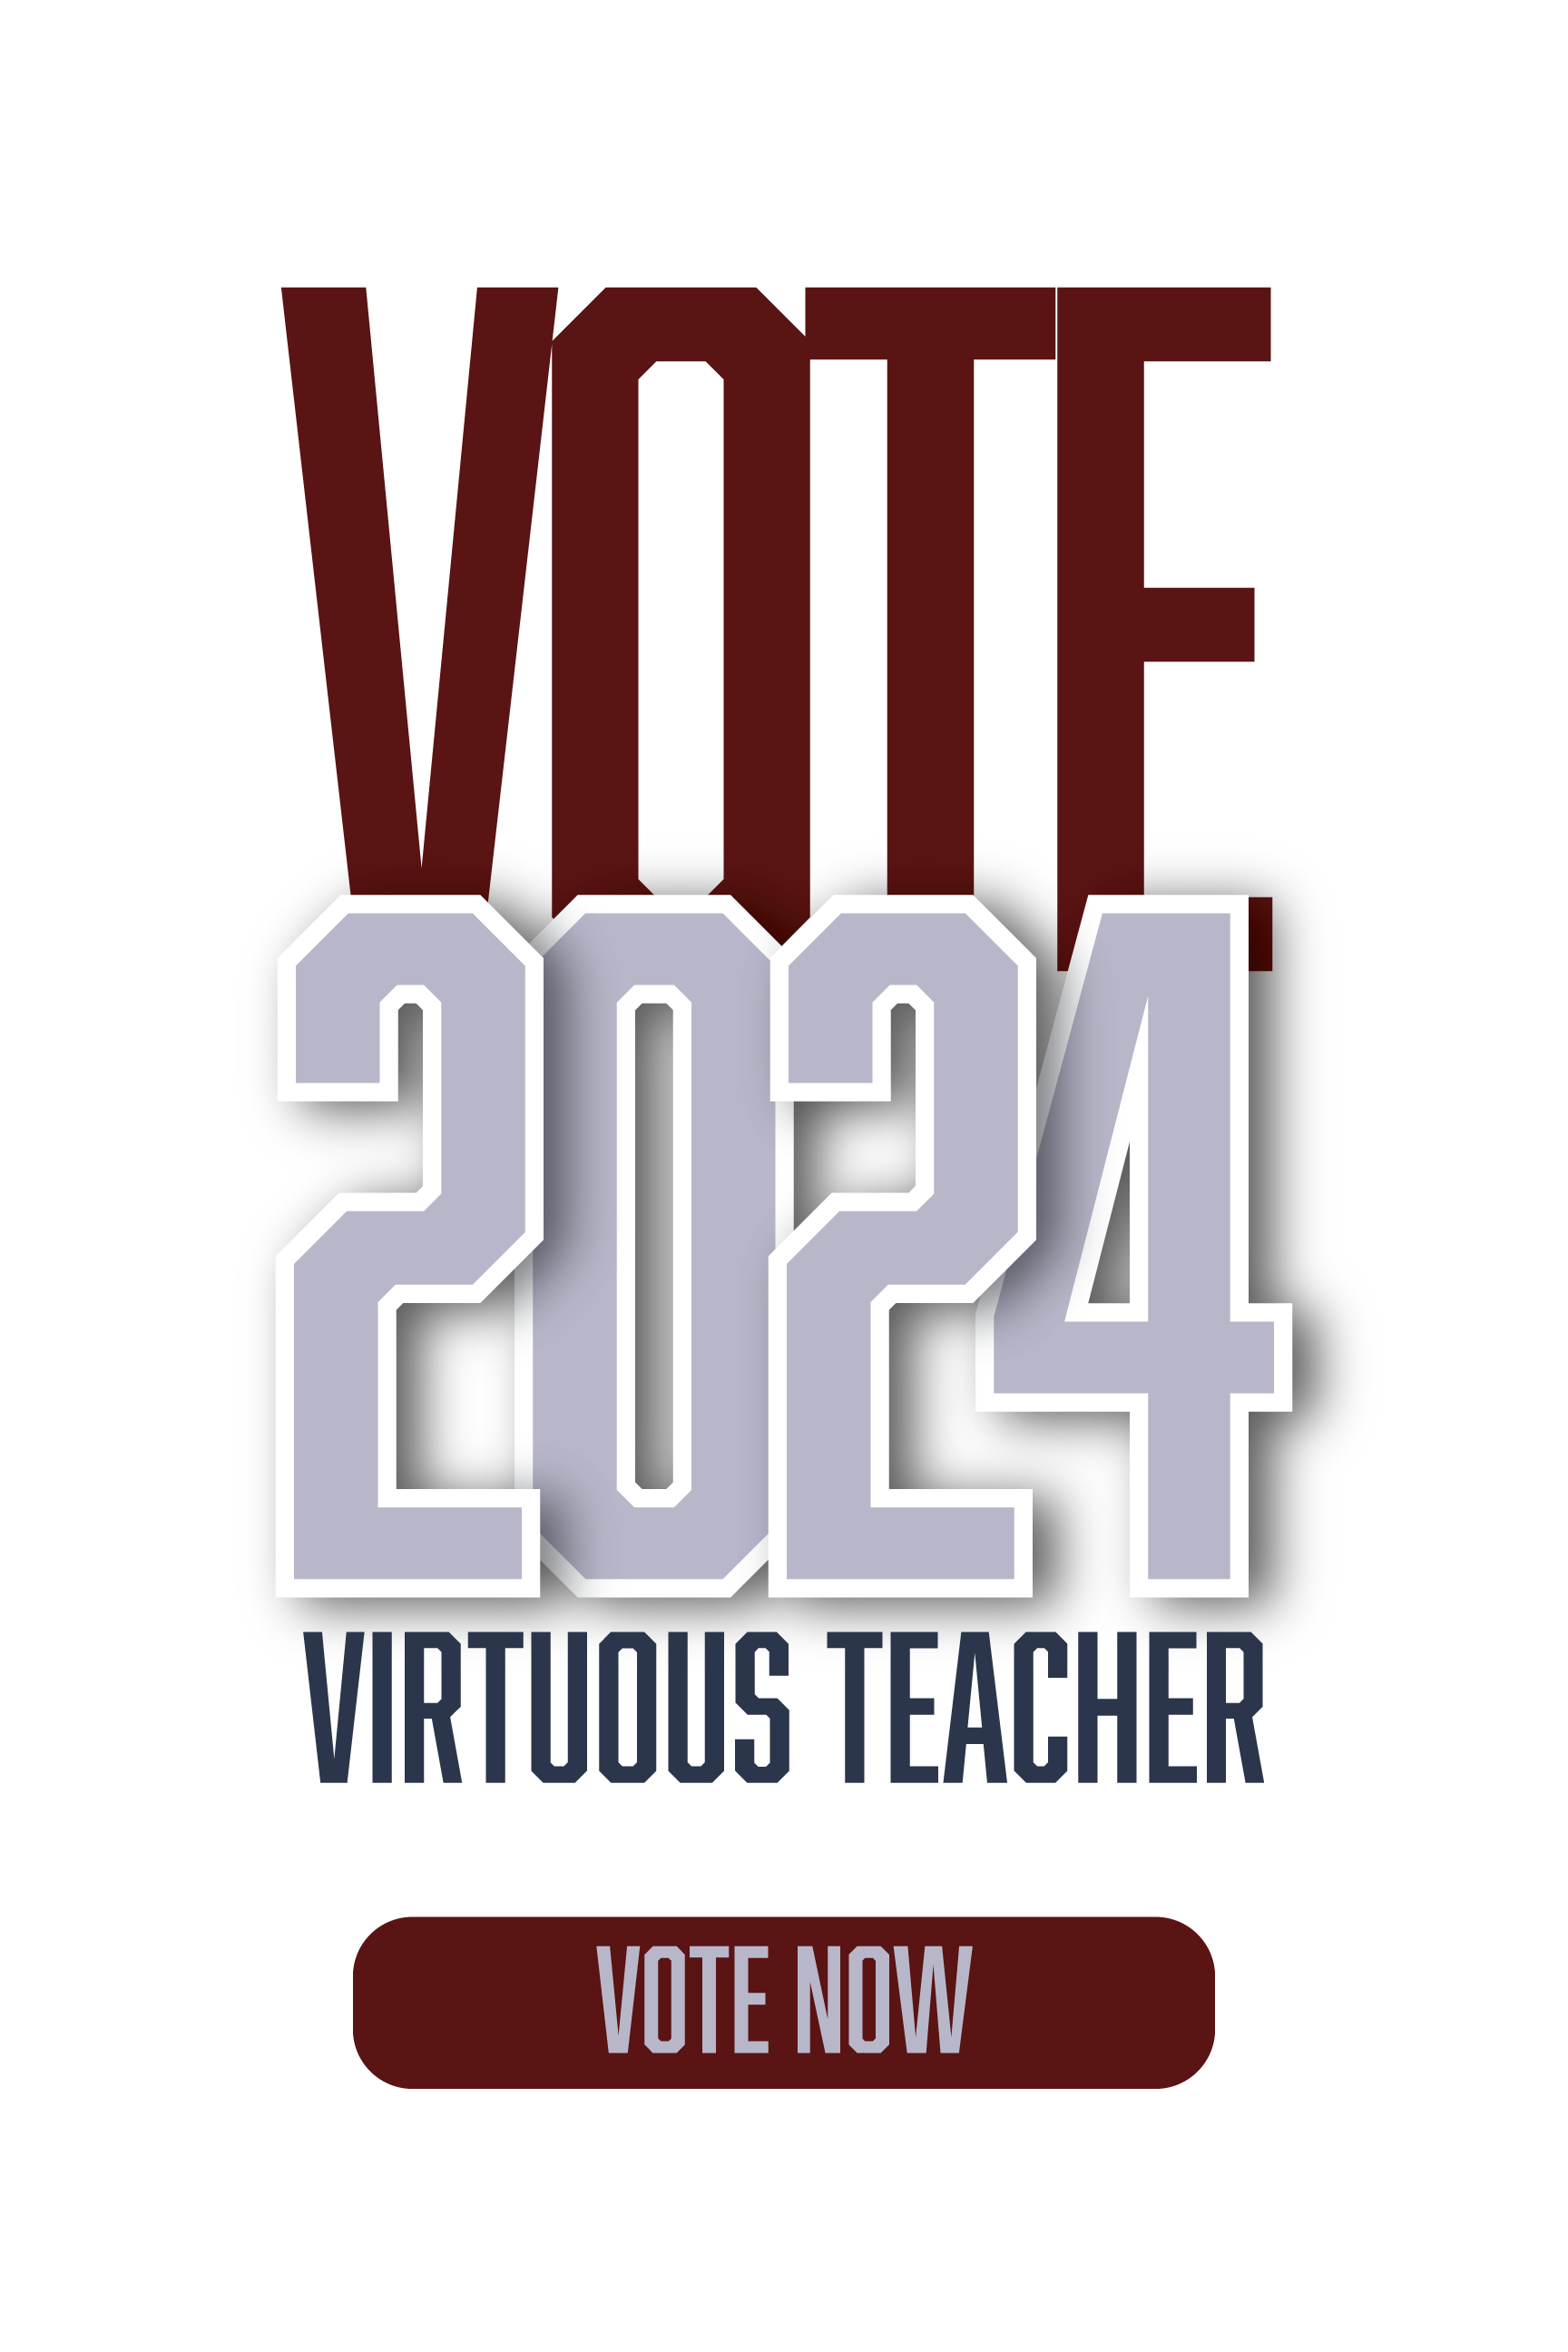 Virtuous Teacher